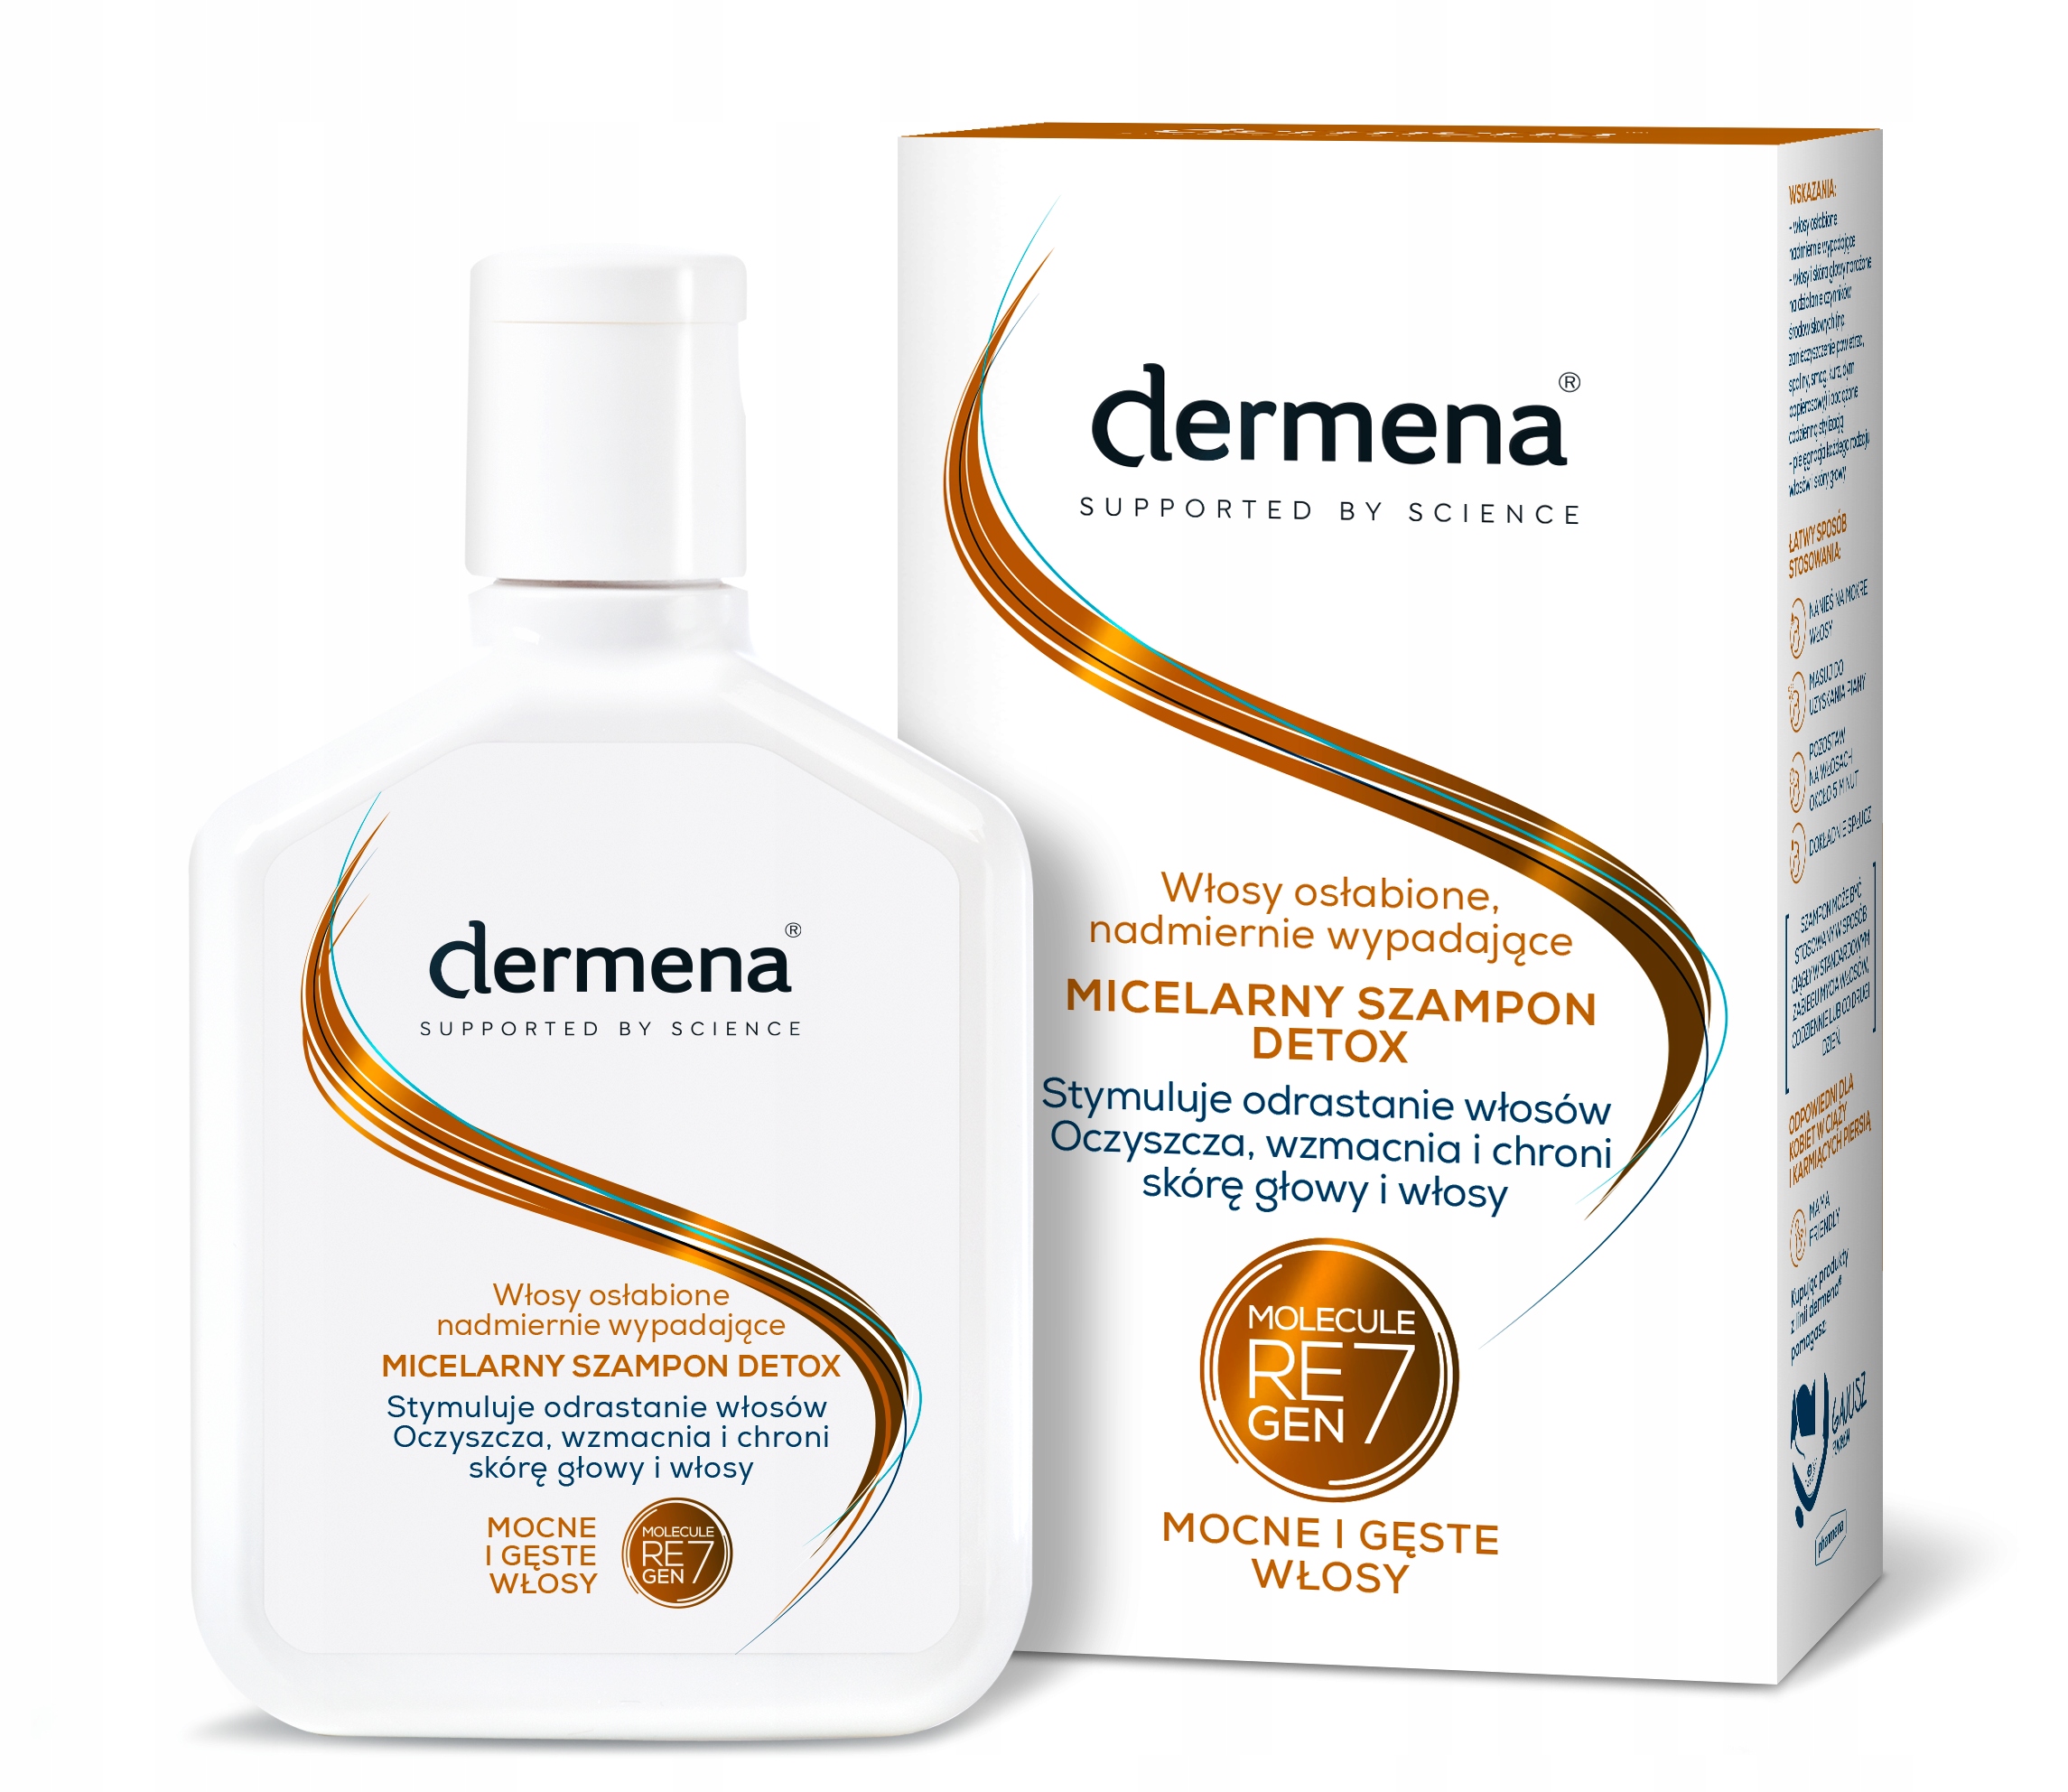 dermena szampon repair